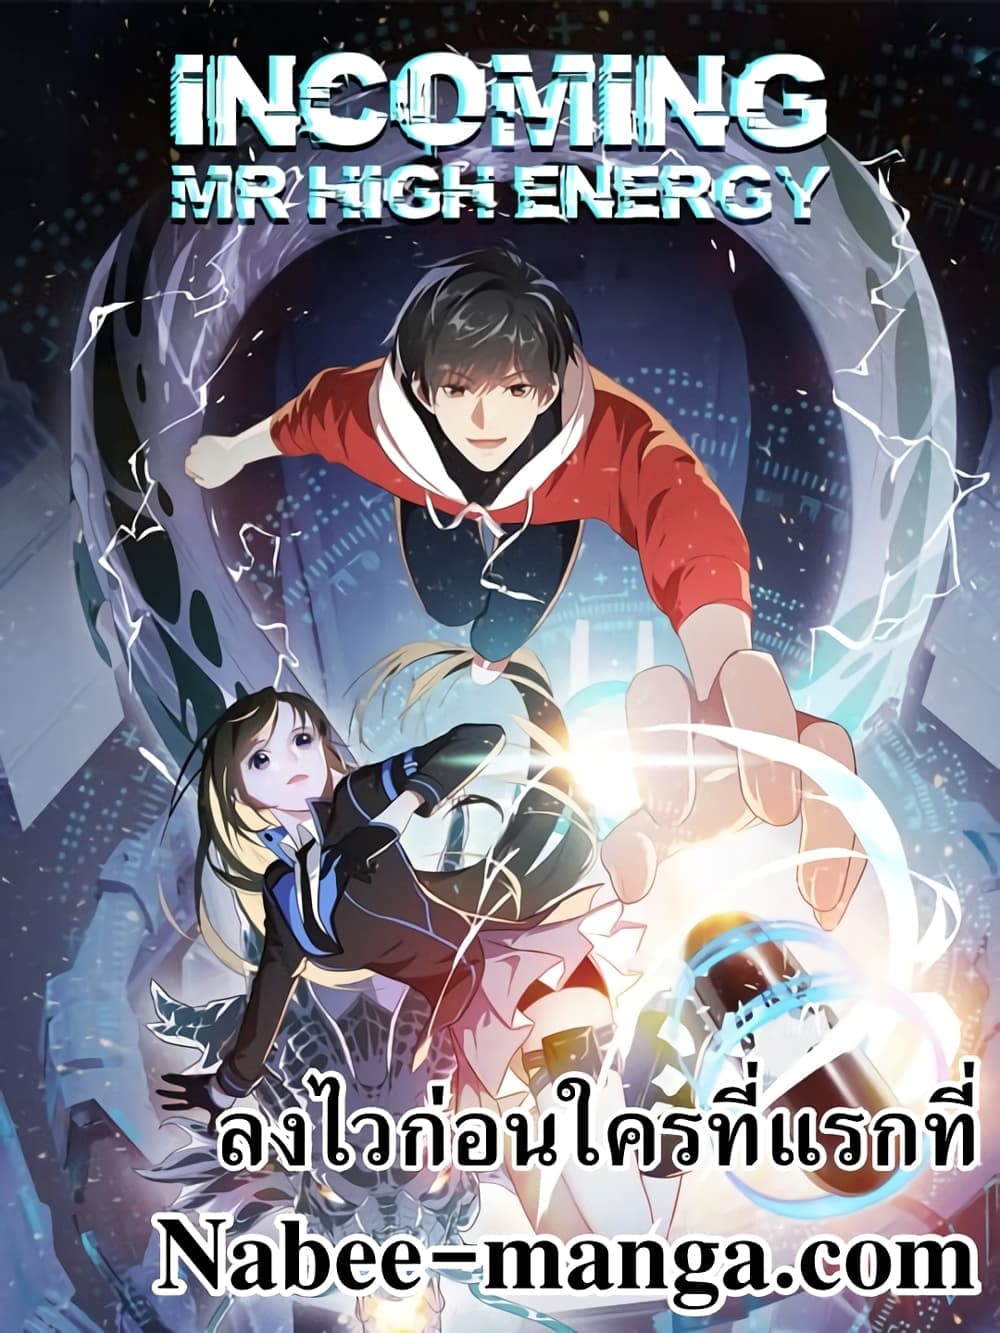 High Energy Strikes à¸à¸­à¸à¸à¸µà¹ 236 (1)